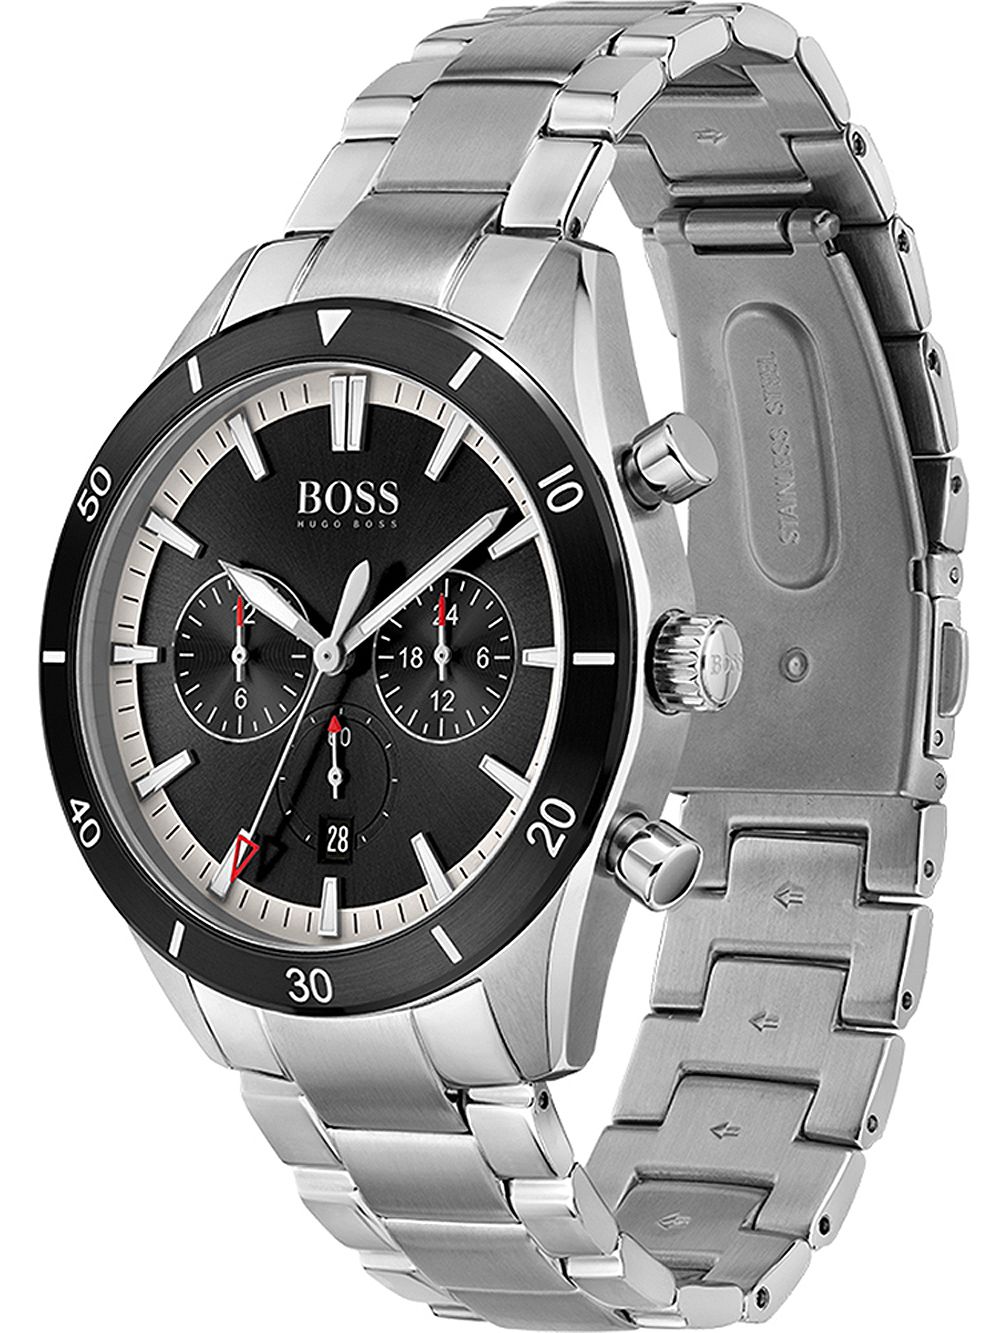 Hugo Boss Santiago Stainless Steel Men's Watch 1513862 - Big Daddy Watches #2